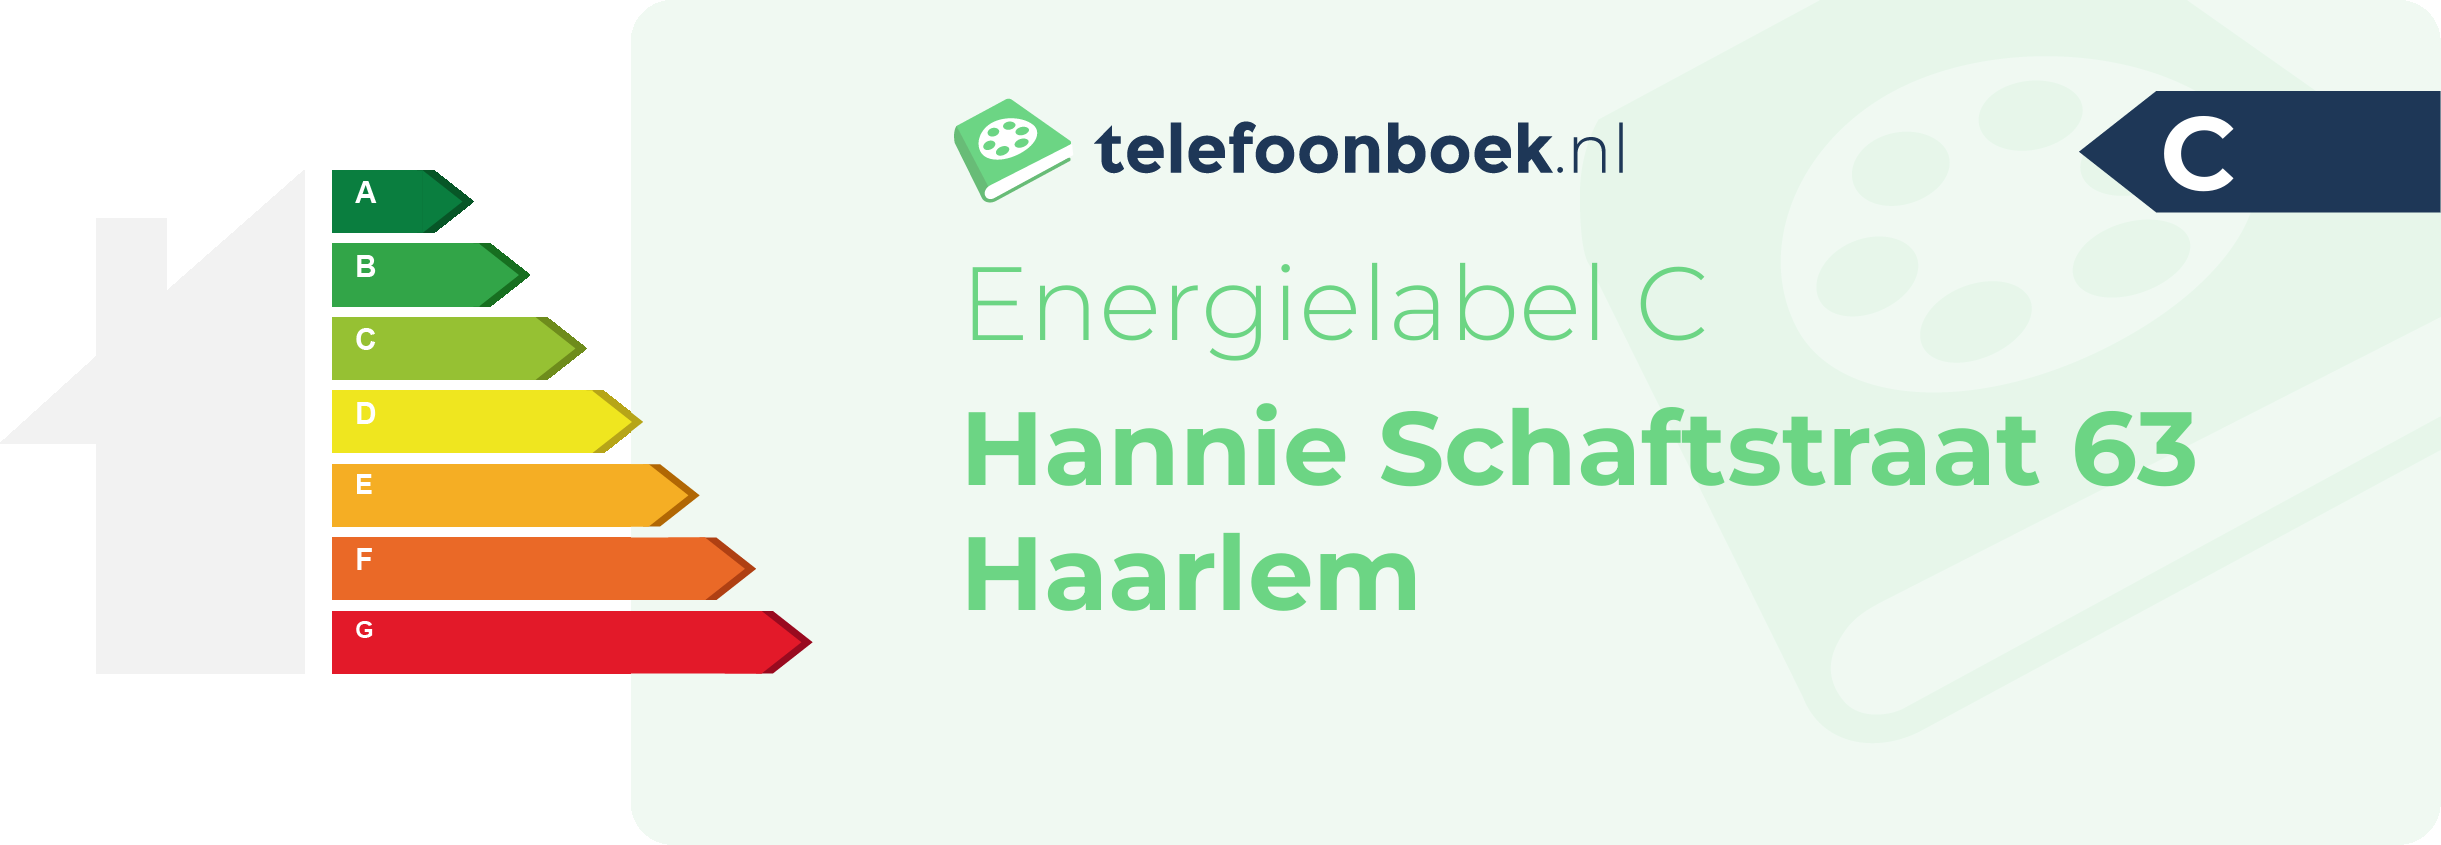 Energielabel Hannie Schaftstraat 63 Haarlem